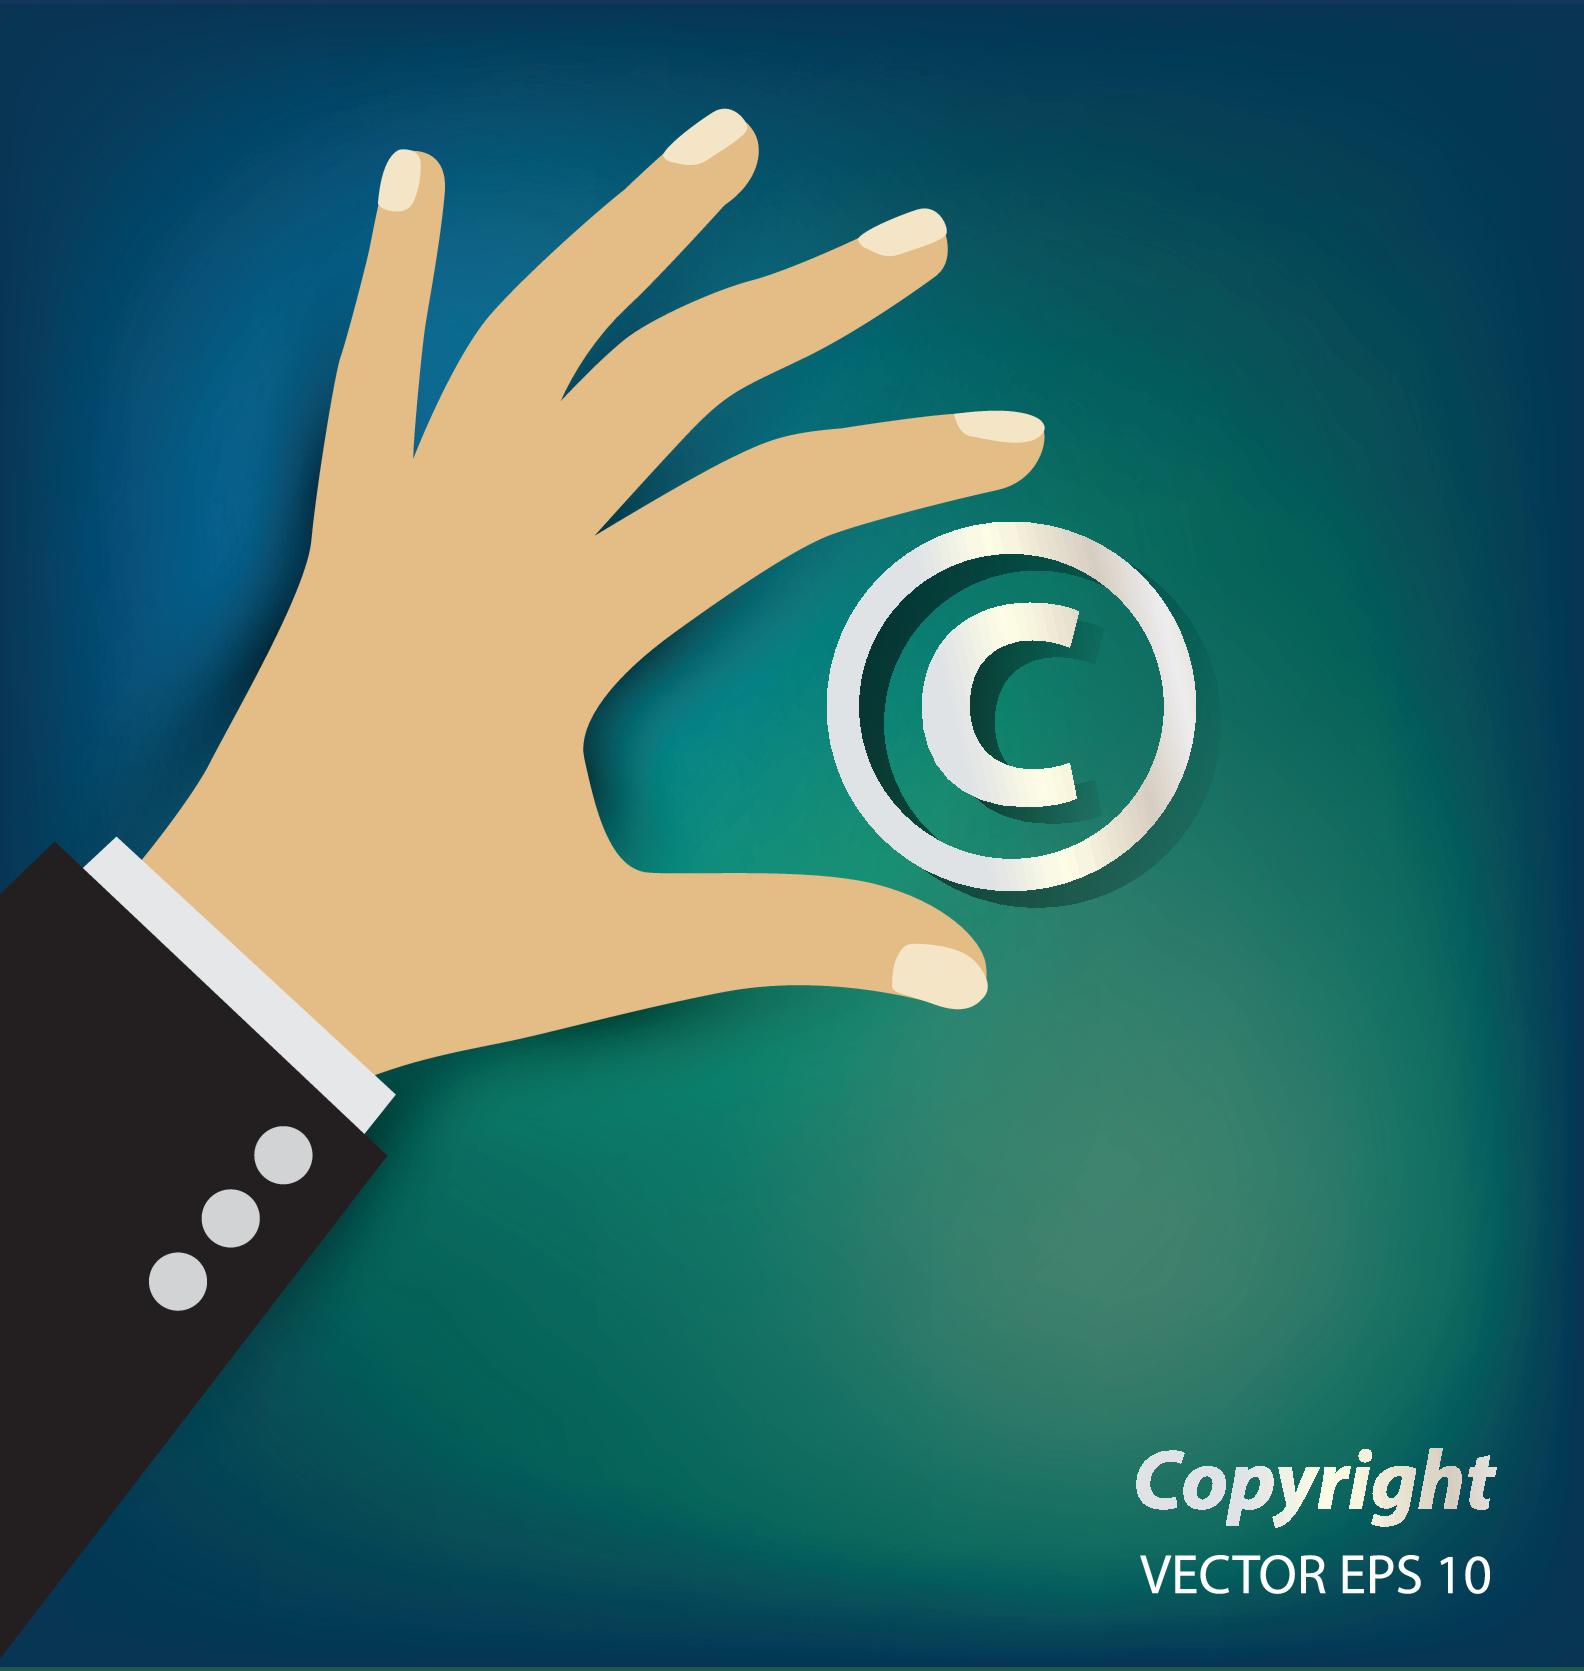 Creative copyright business vector design 02